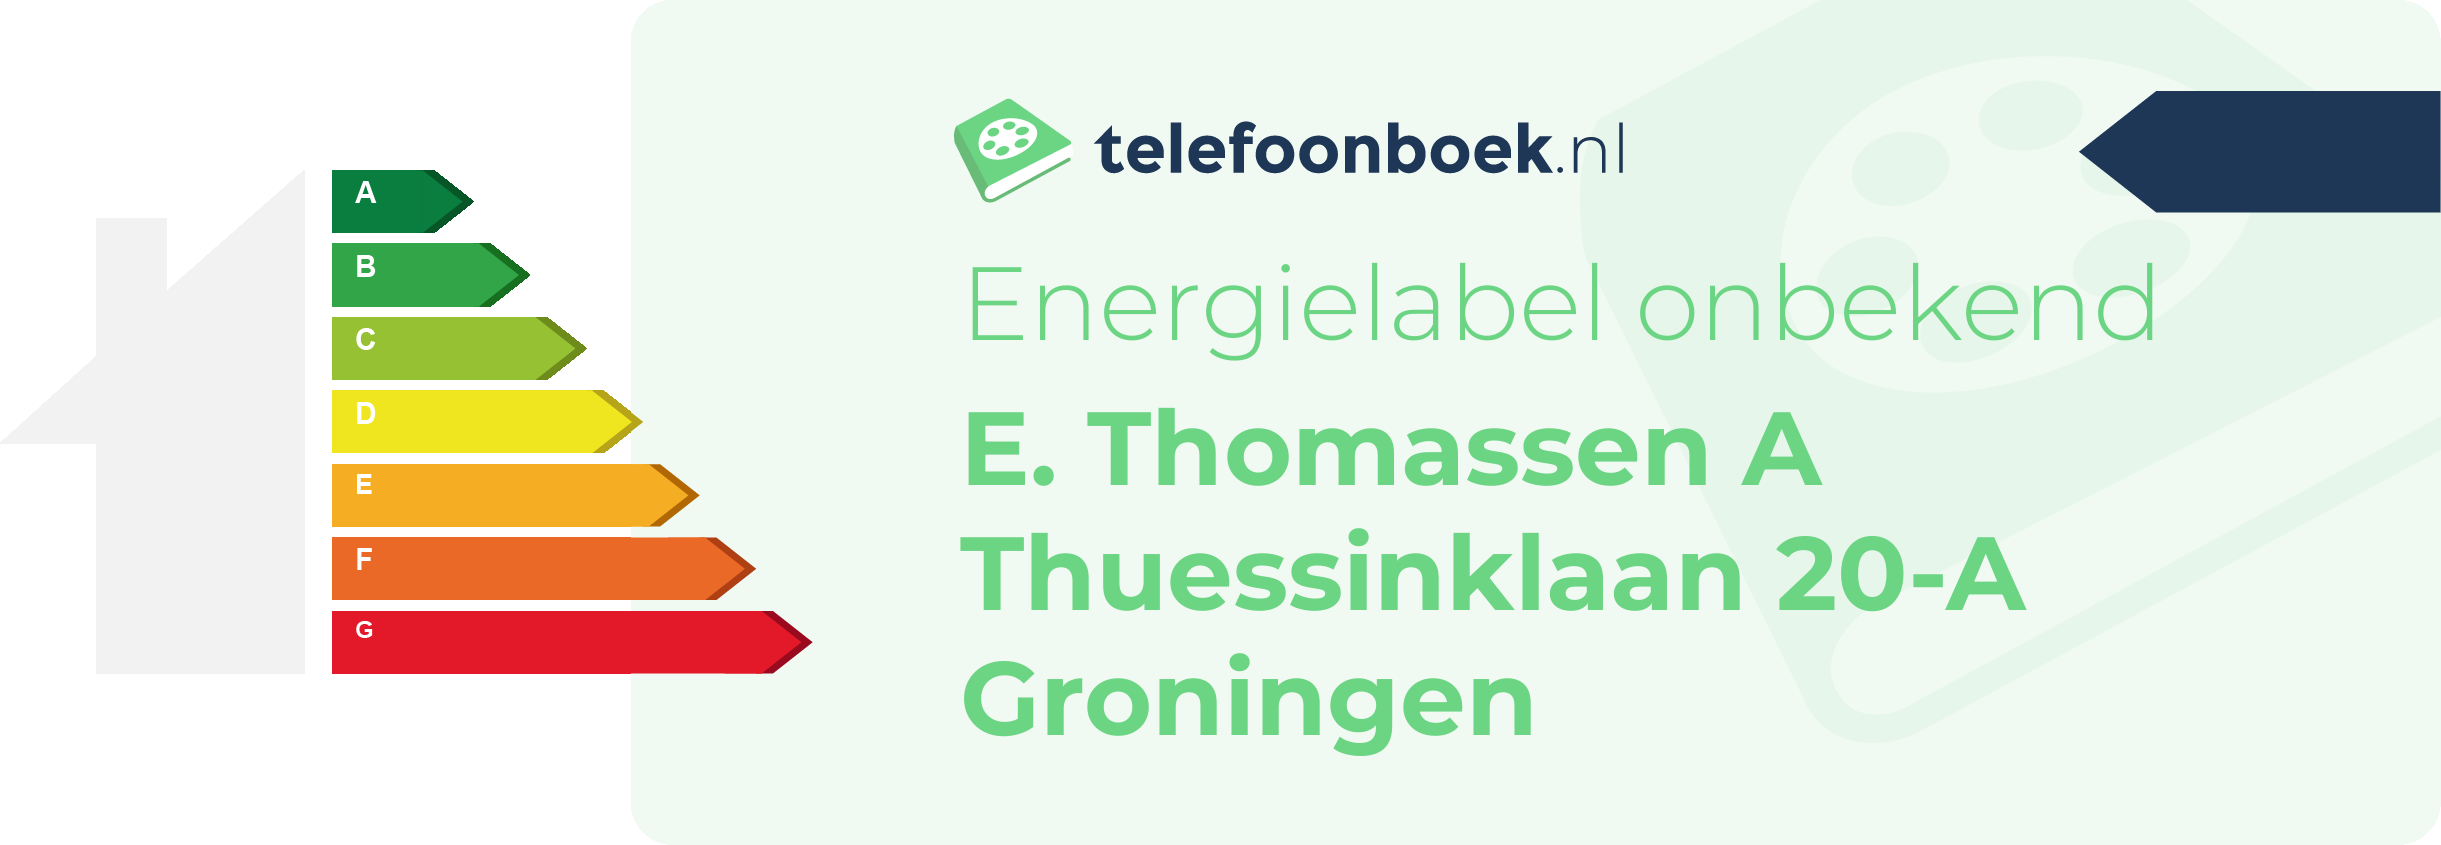 Energielabel E. Thomassen A Thuessinklaan 20-A Groningen